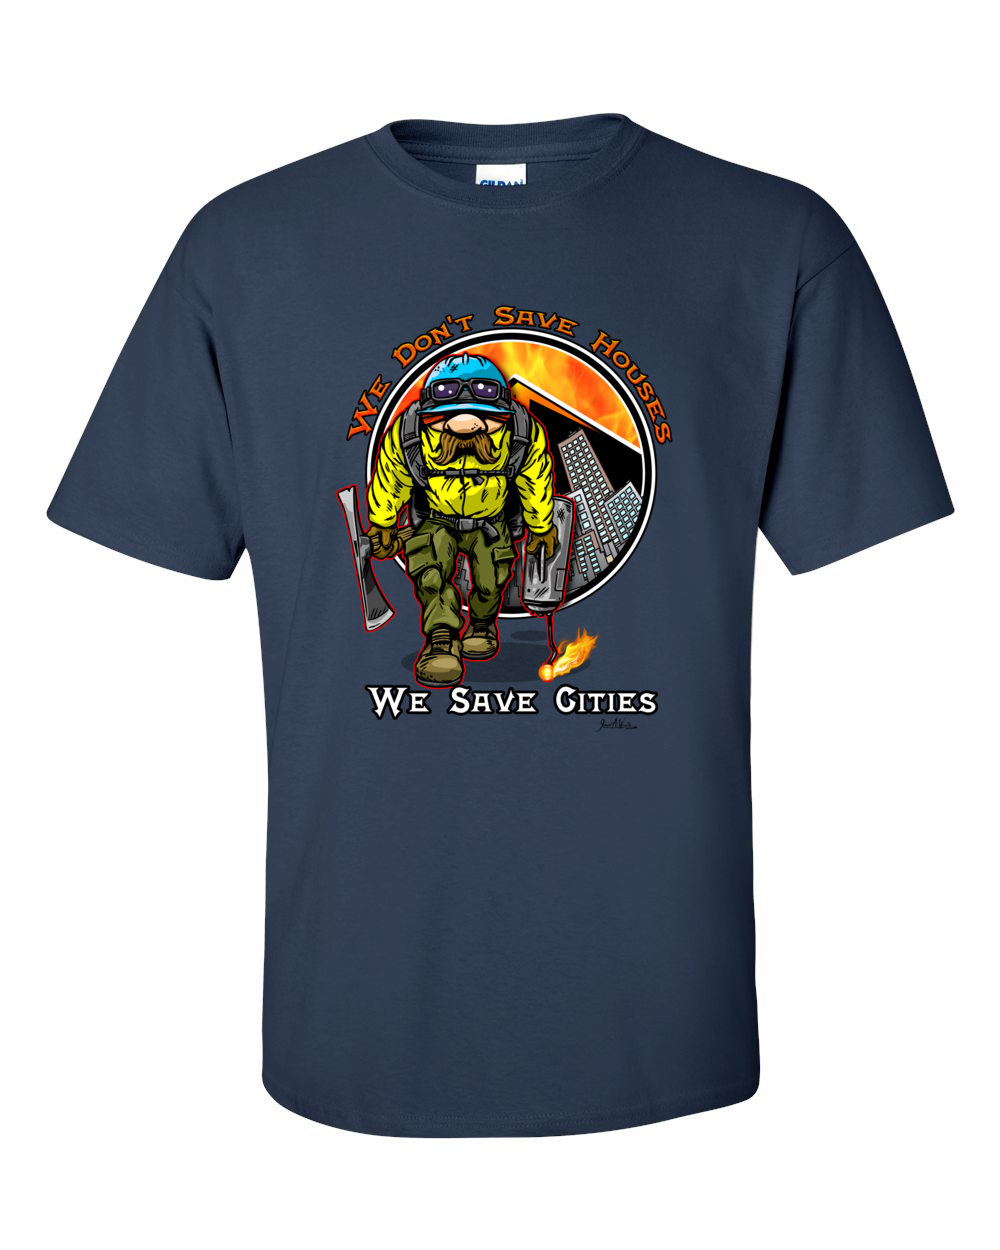 shirt mockup maroon t We We T â€“ Save Houses Donâ€™t Cities Save â€“ Hotshot Shirt